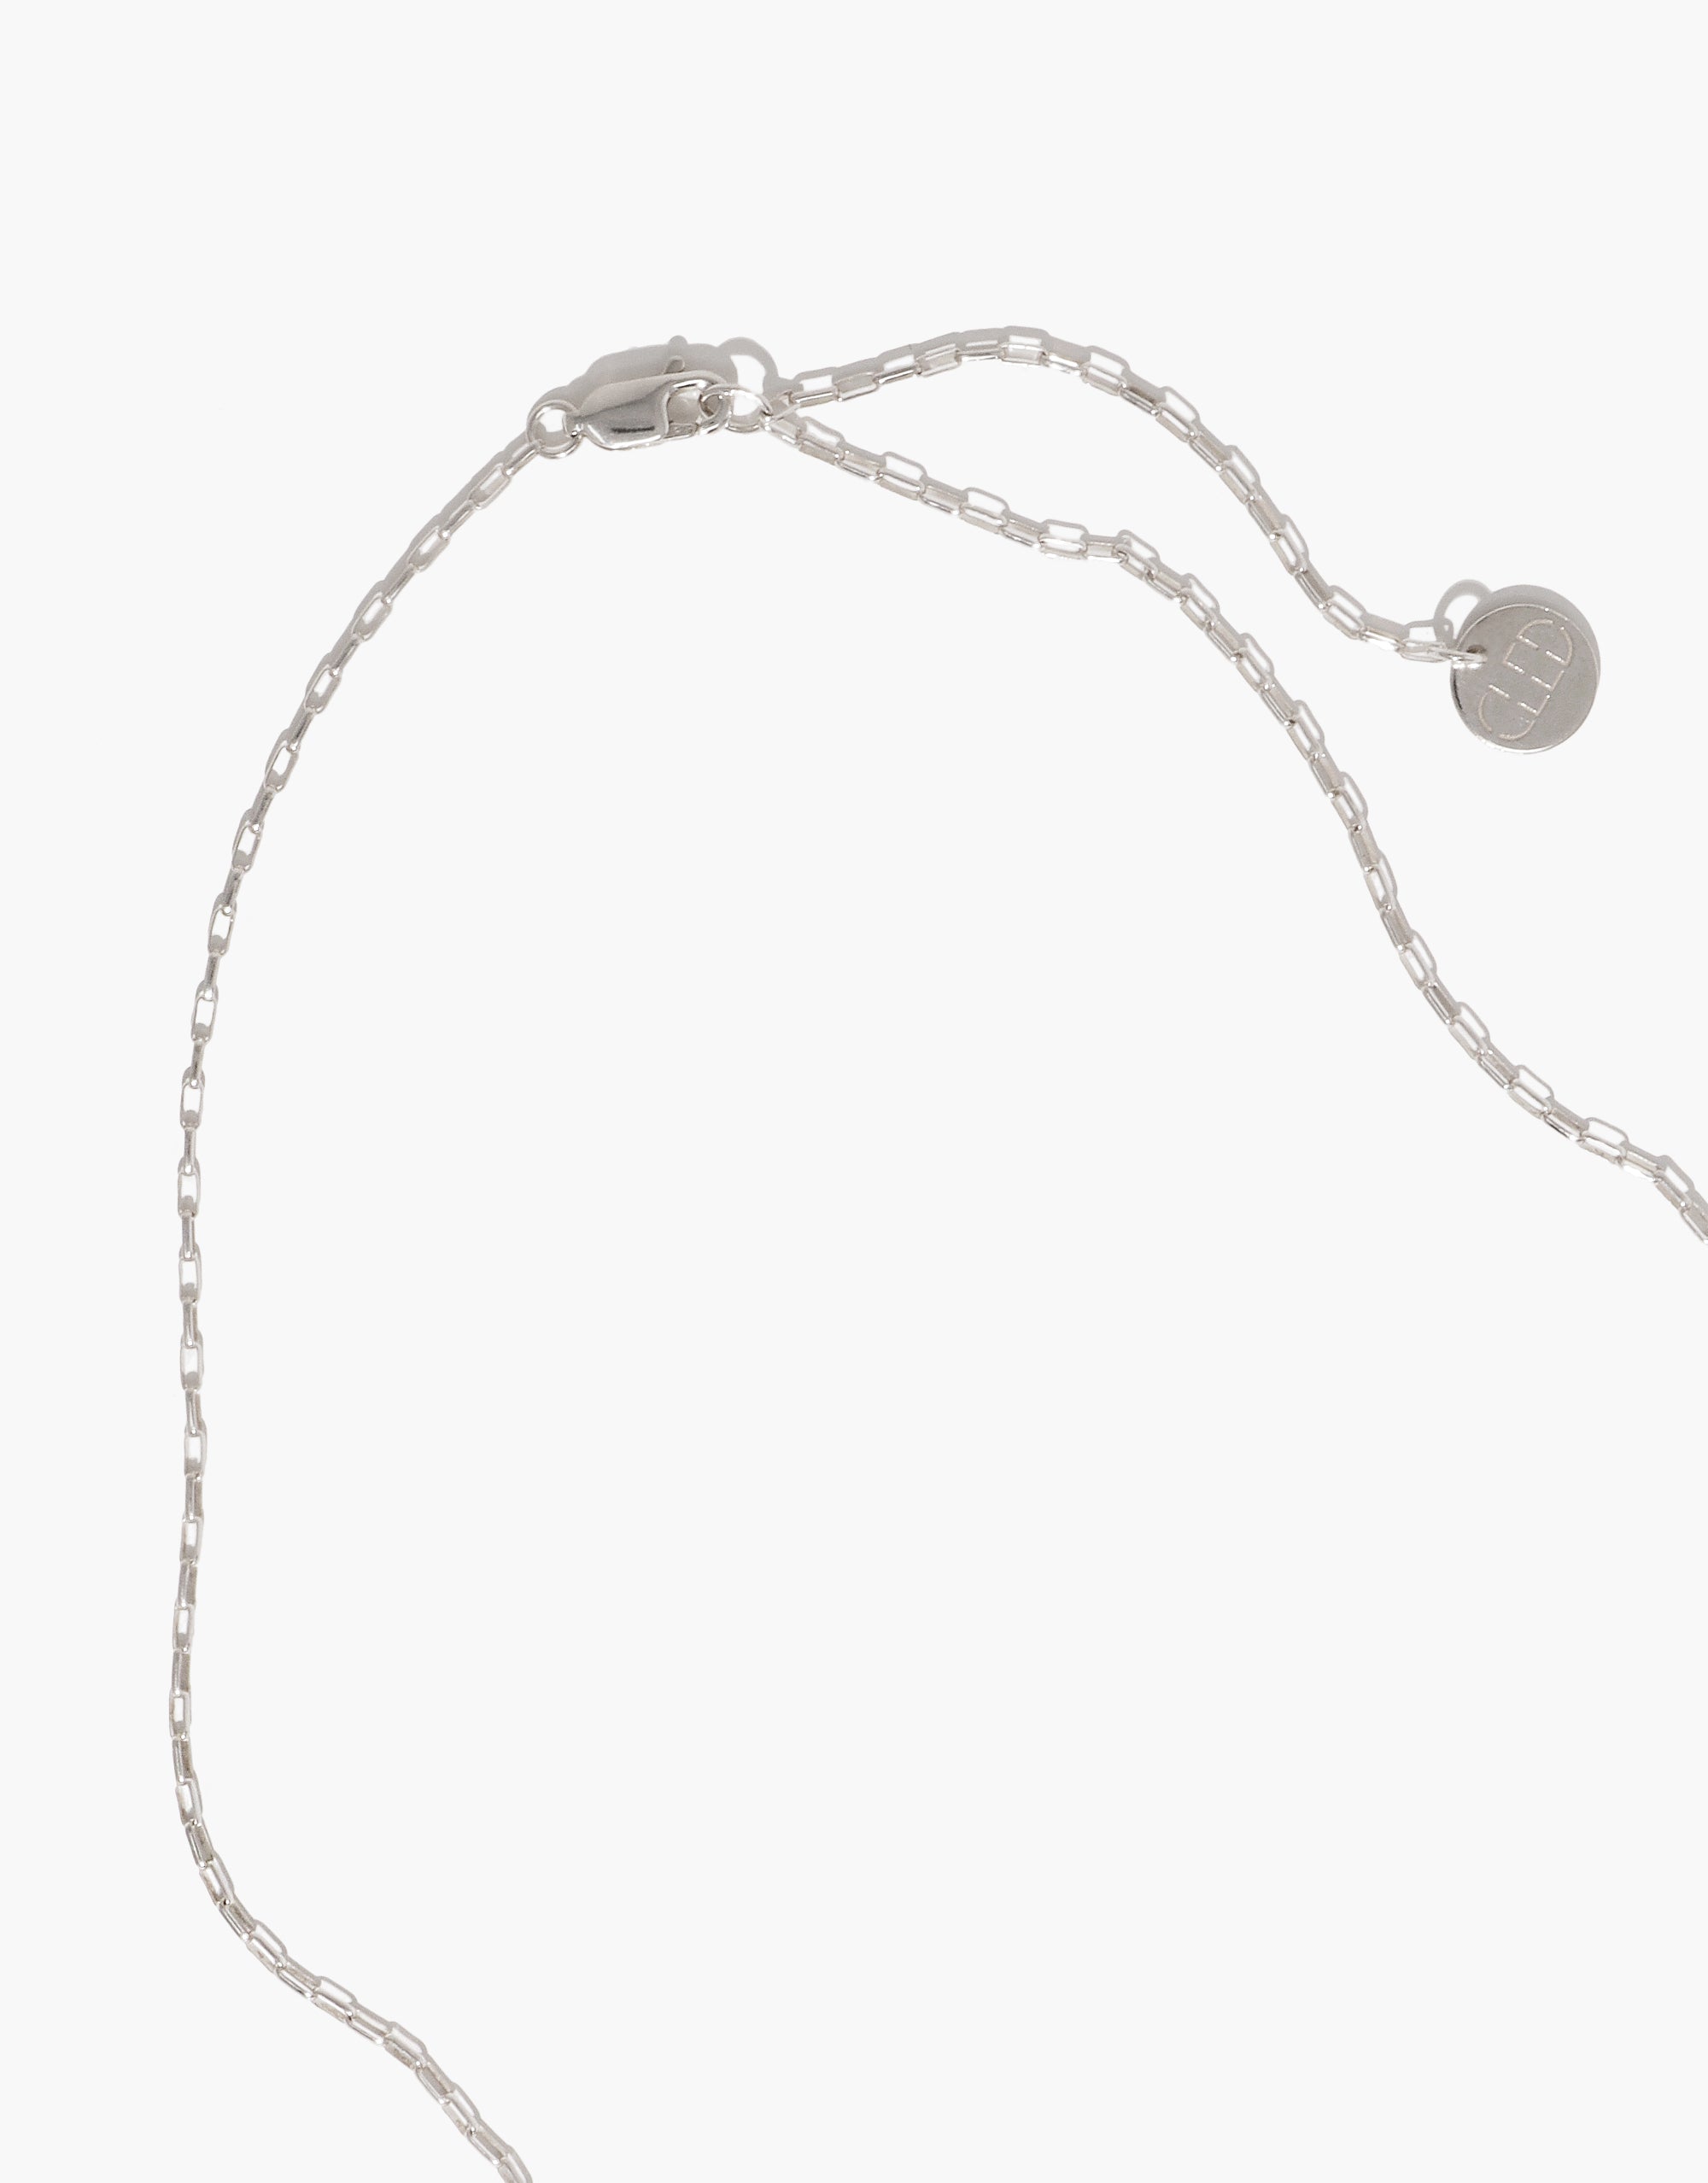 Baroni Designs Glass STAR Multicolor Necklace Leather Cord silver 925 hook.  C | eBay